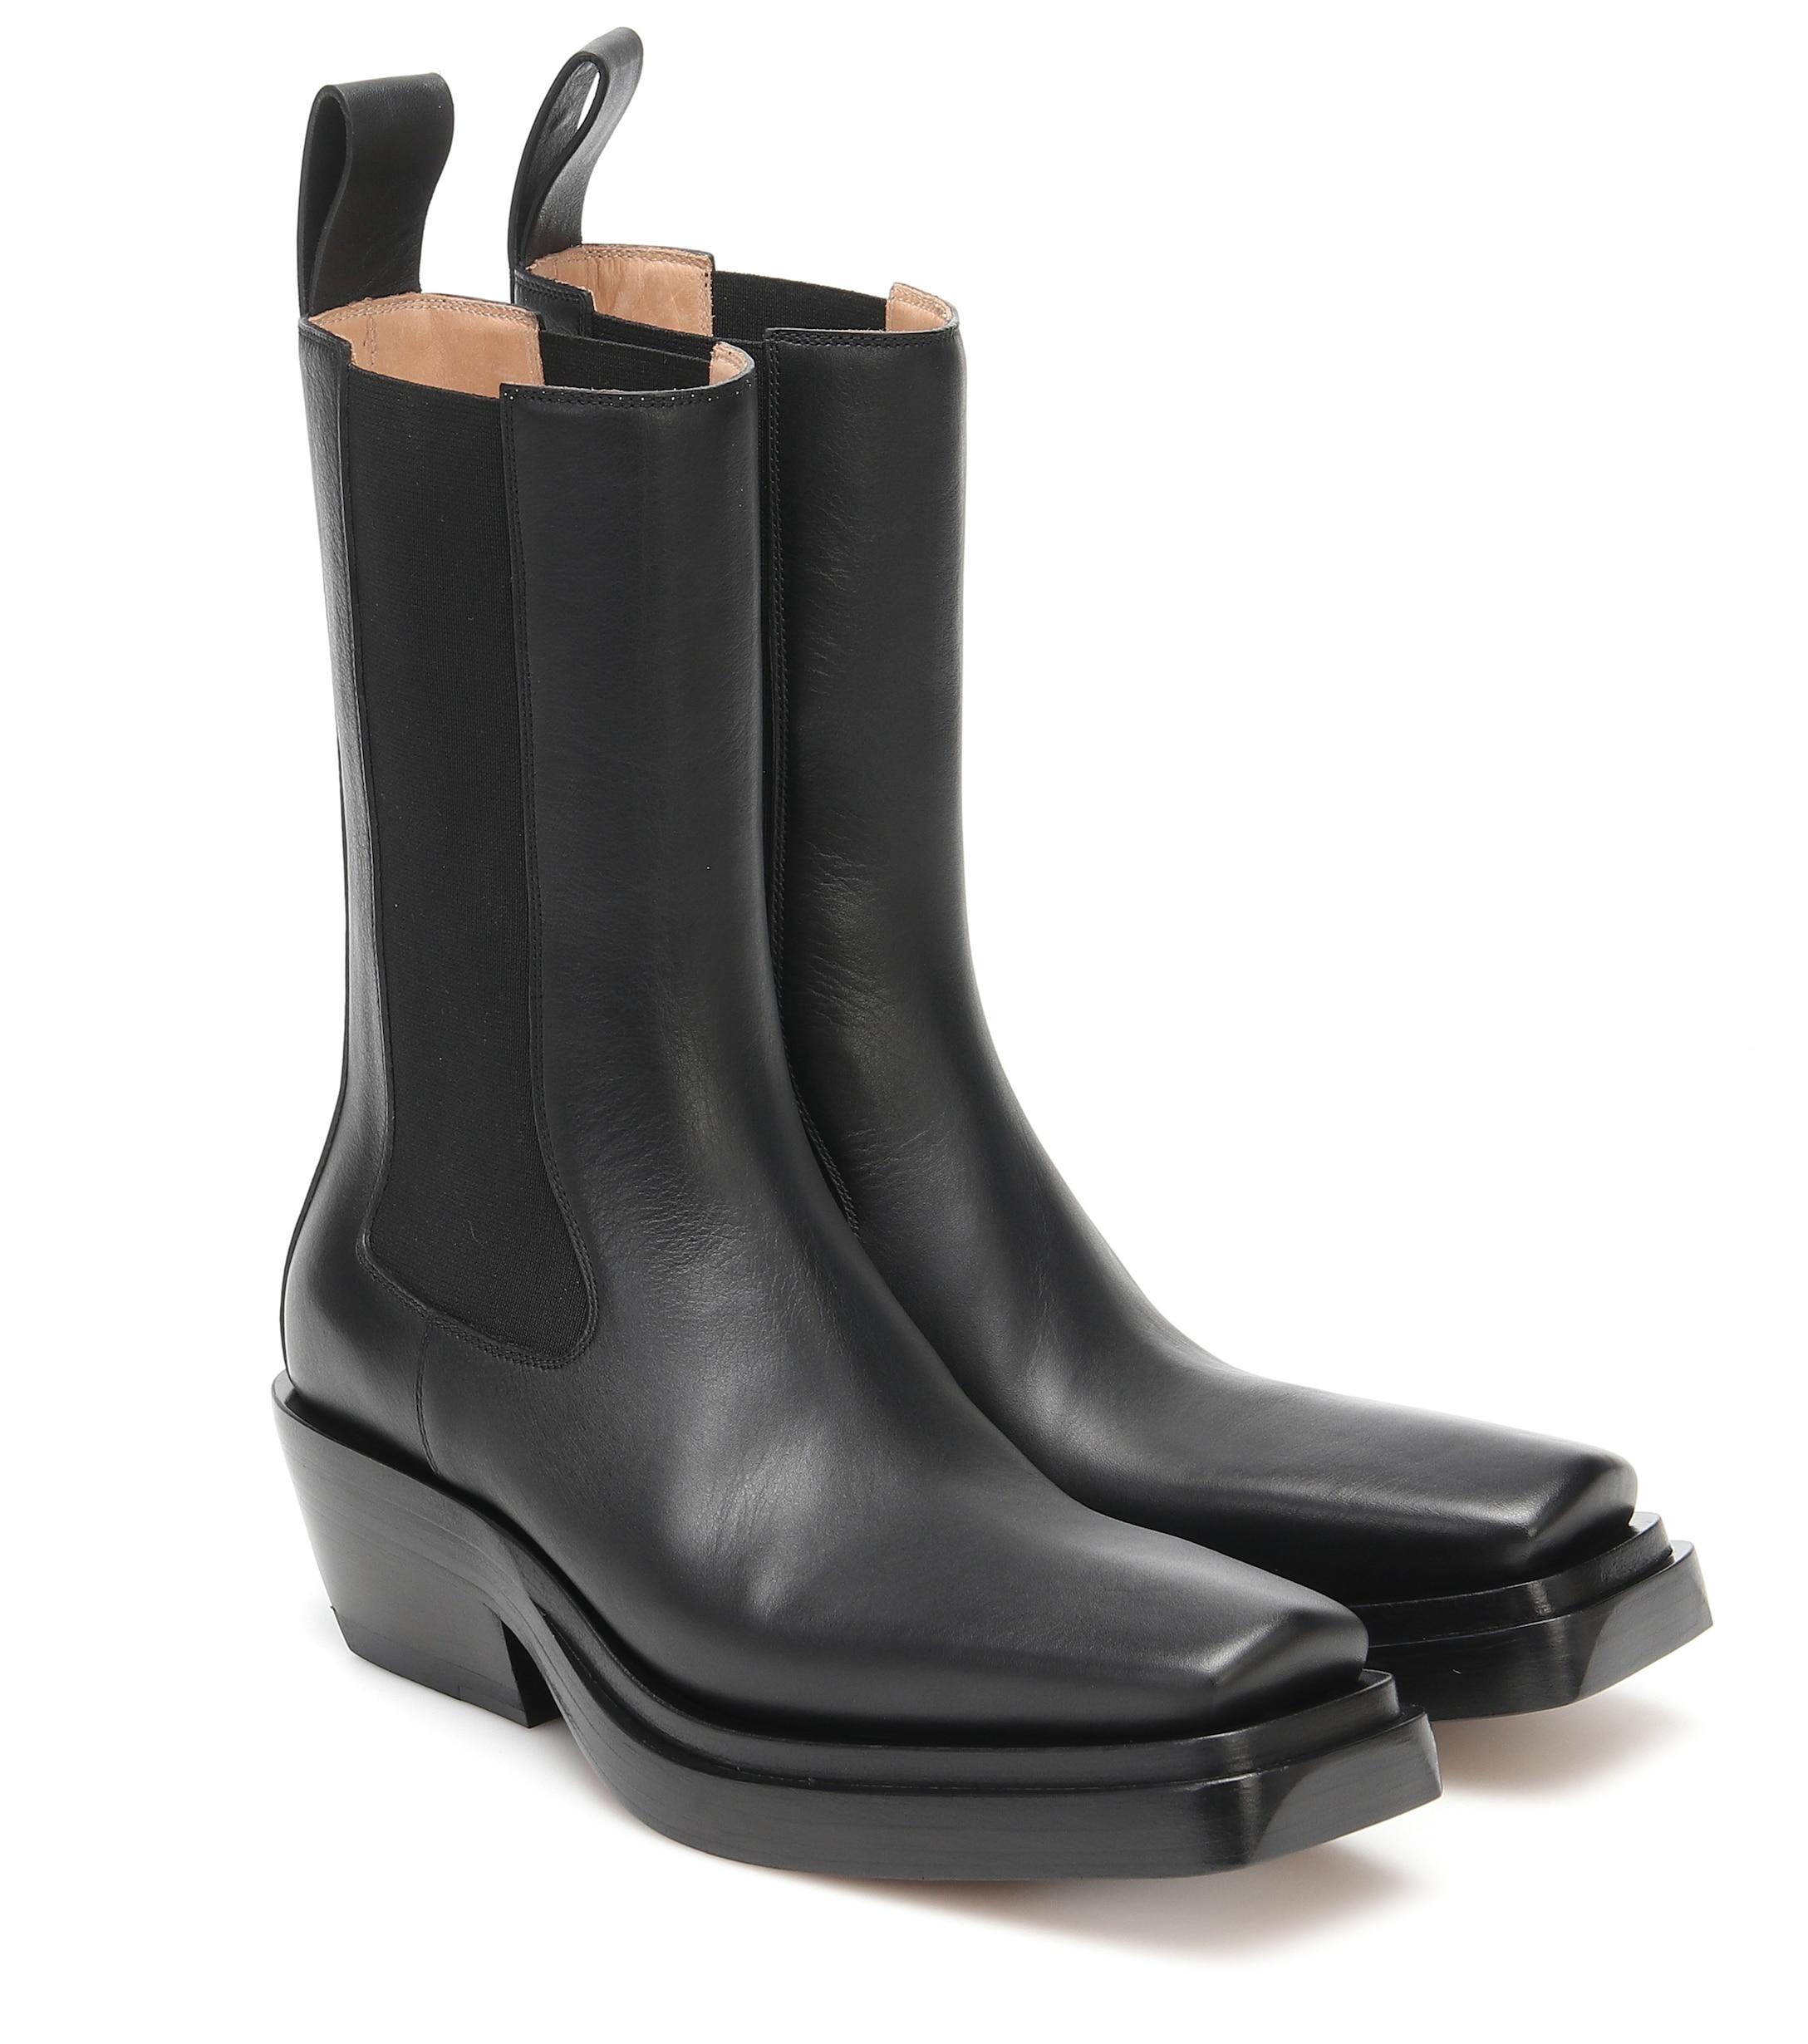 Bottega Veneta Bv Lean Leather Ankle Boots in Black - Lyst